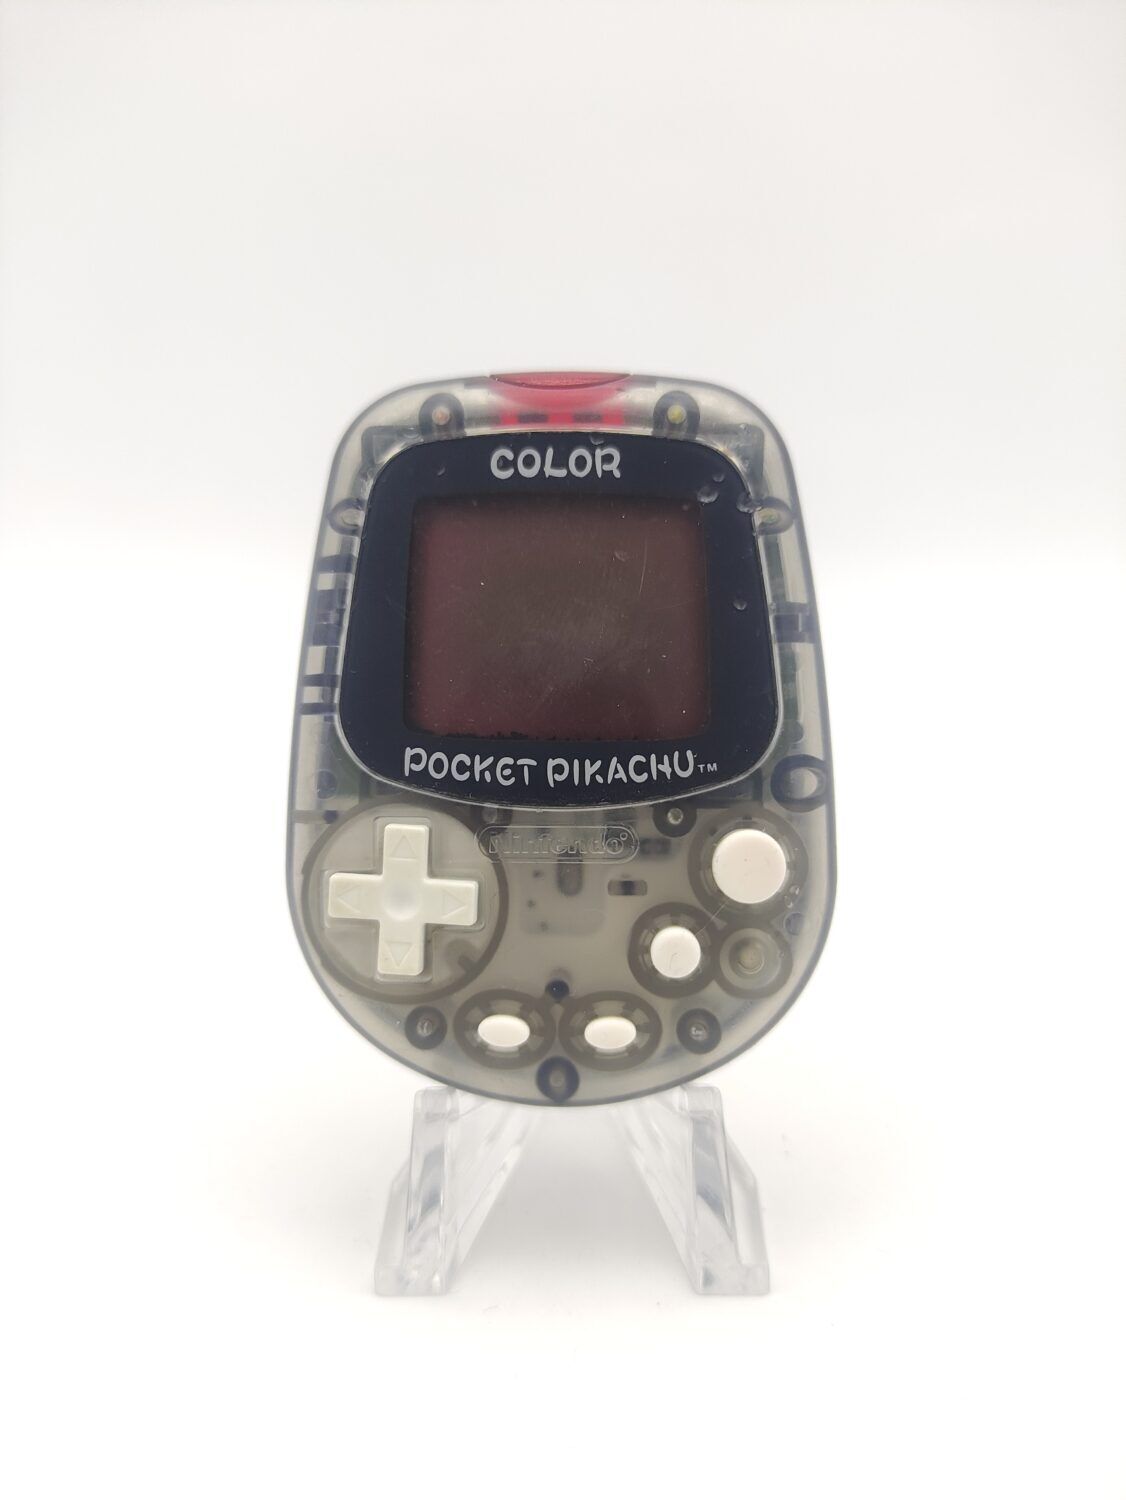 Nintendo Pokemon Pikachu Pocket Color Game Grey Pedometer